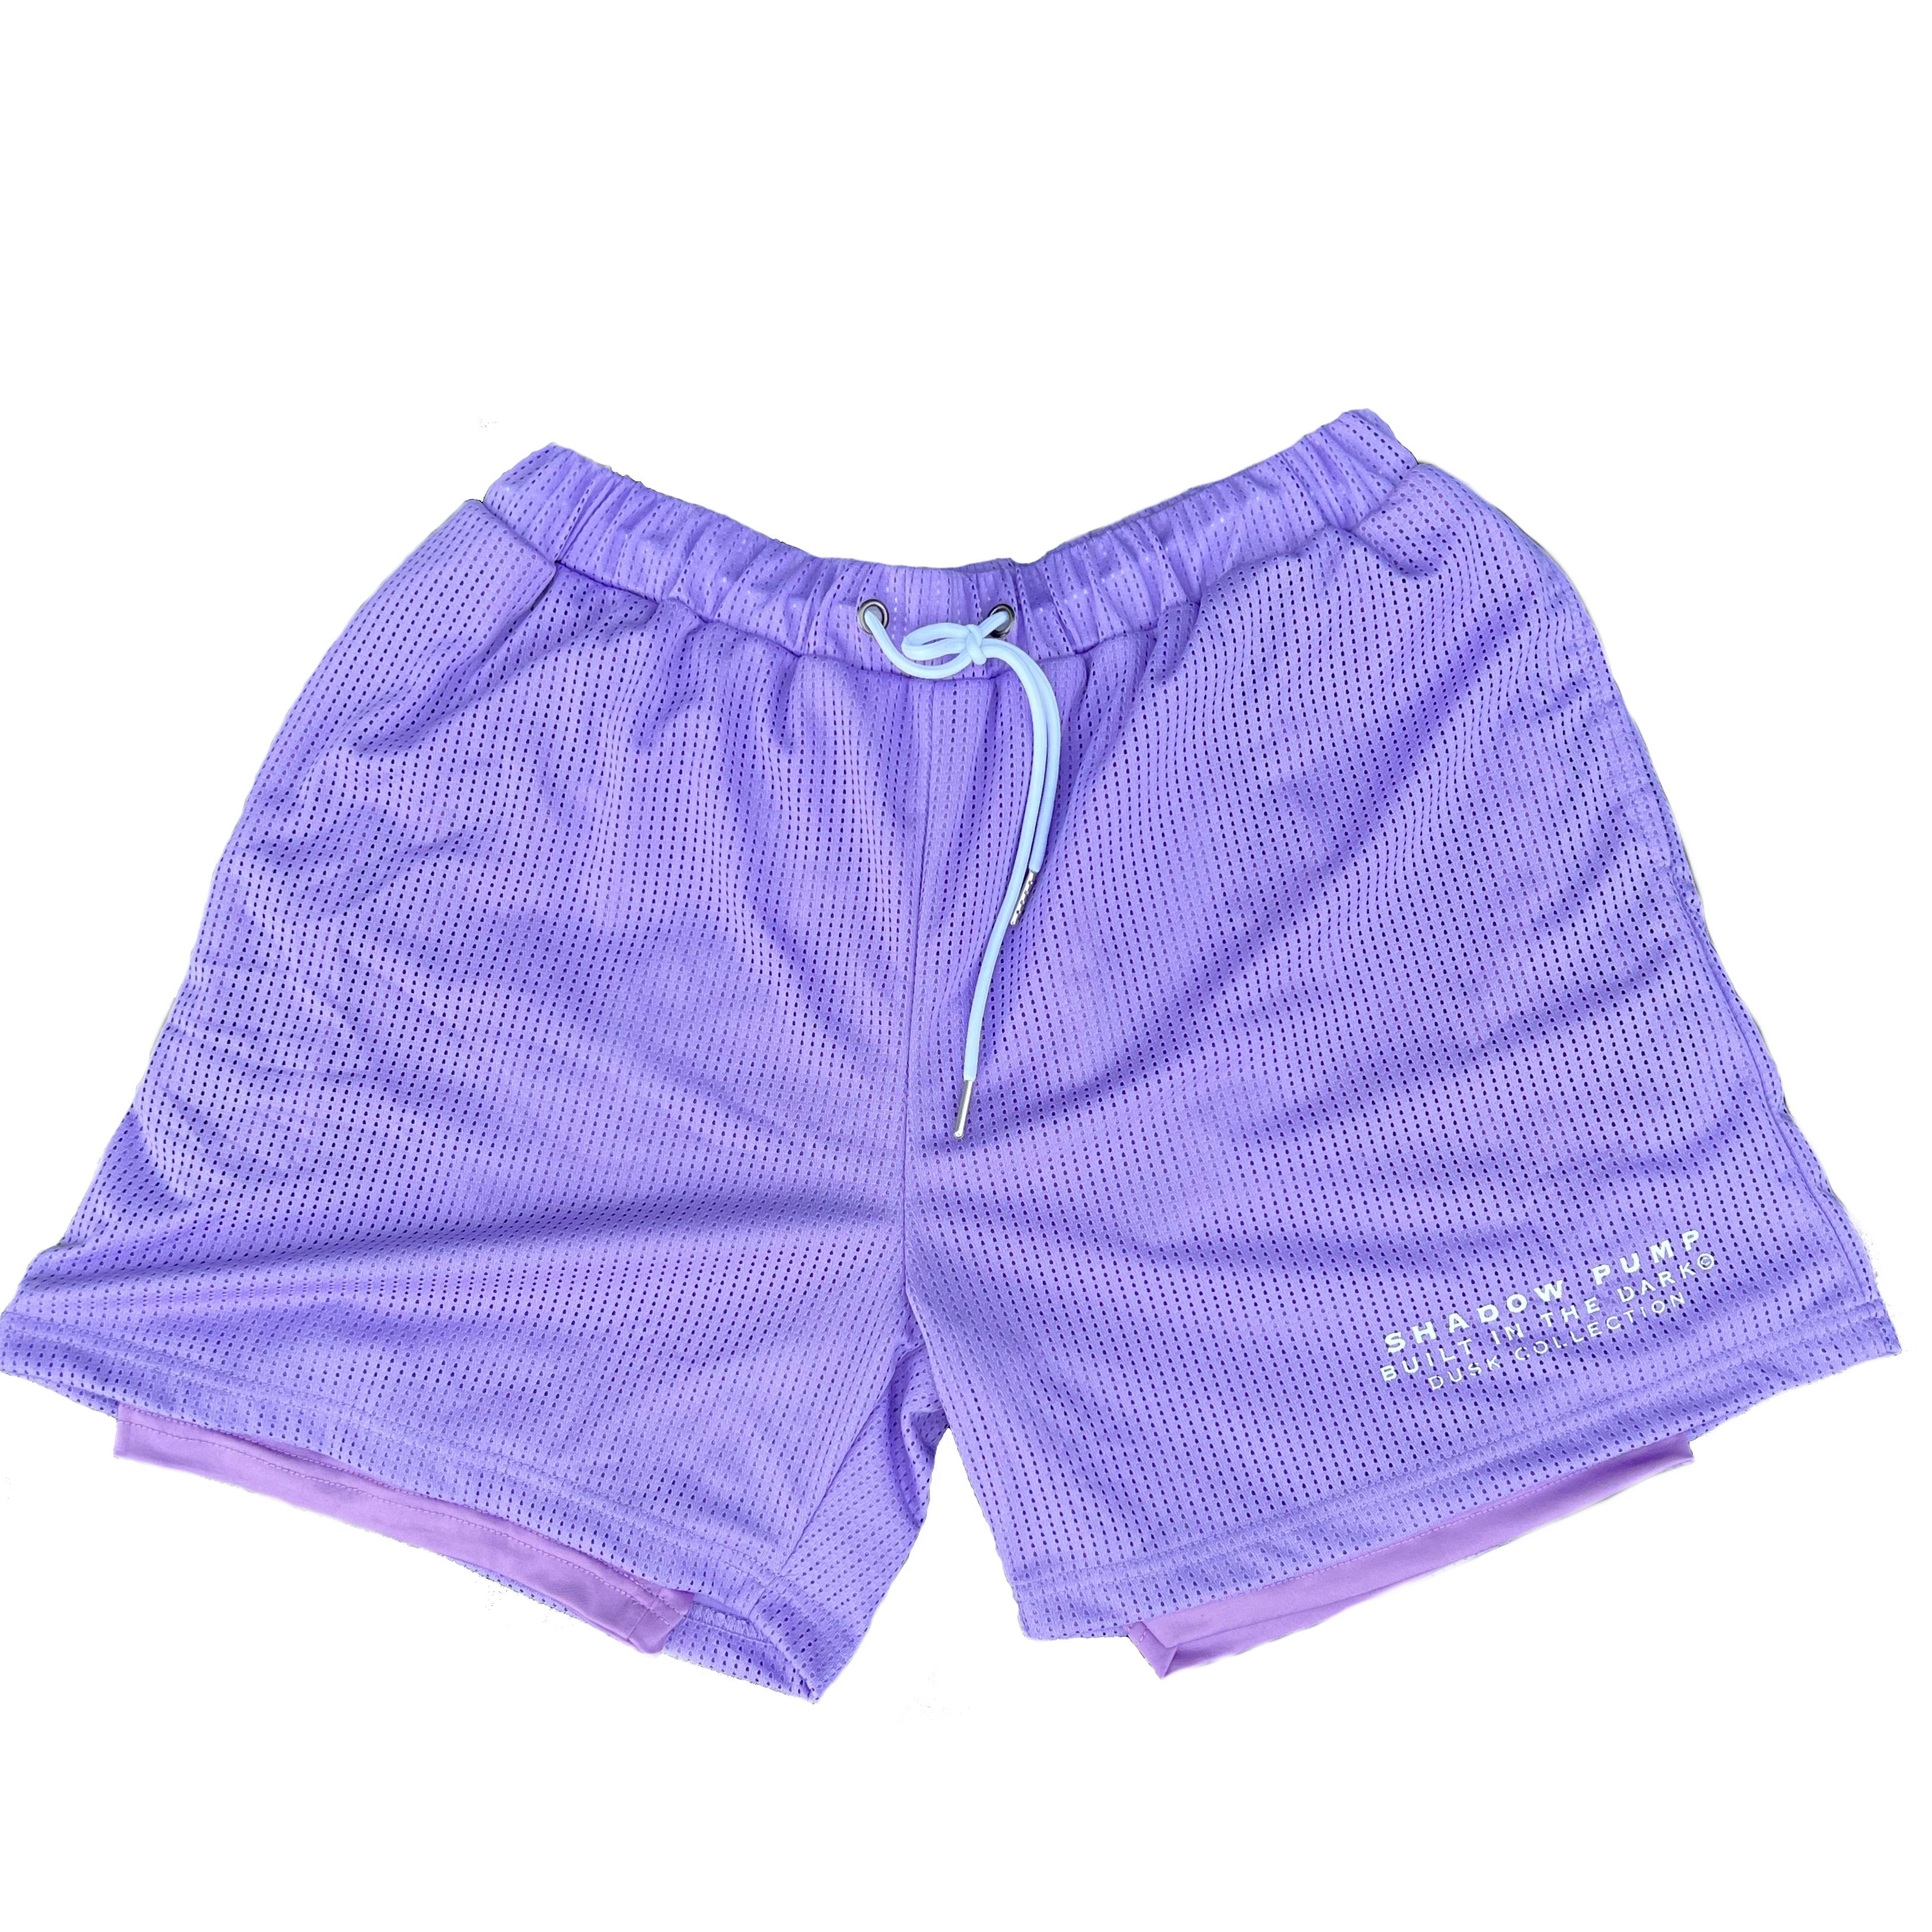 MNDST] Lightning 5-Inch Mesh Shorts (Purple) – Optimal Gains